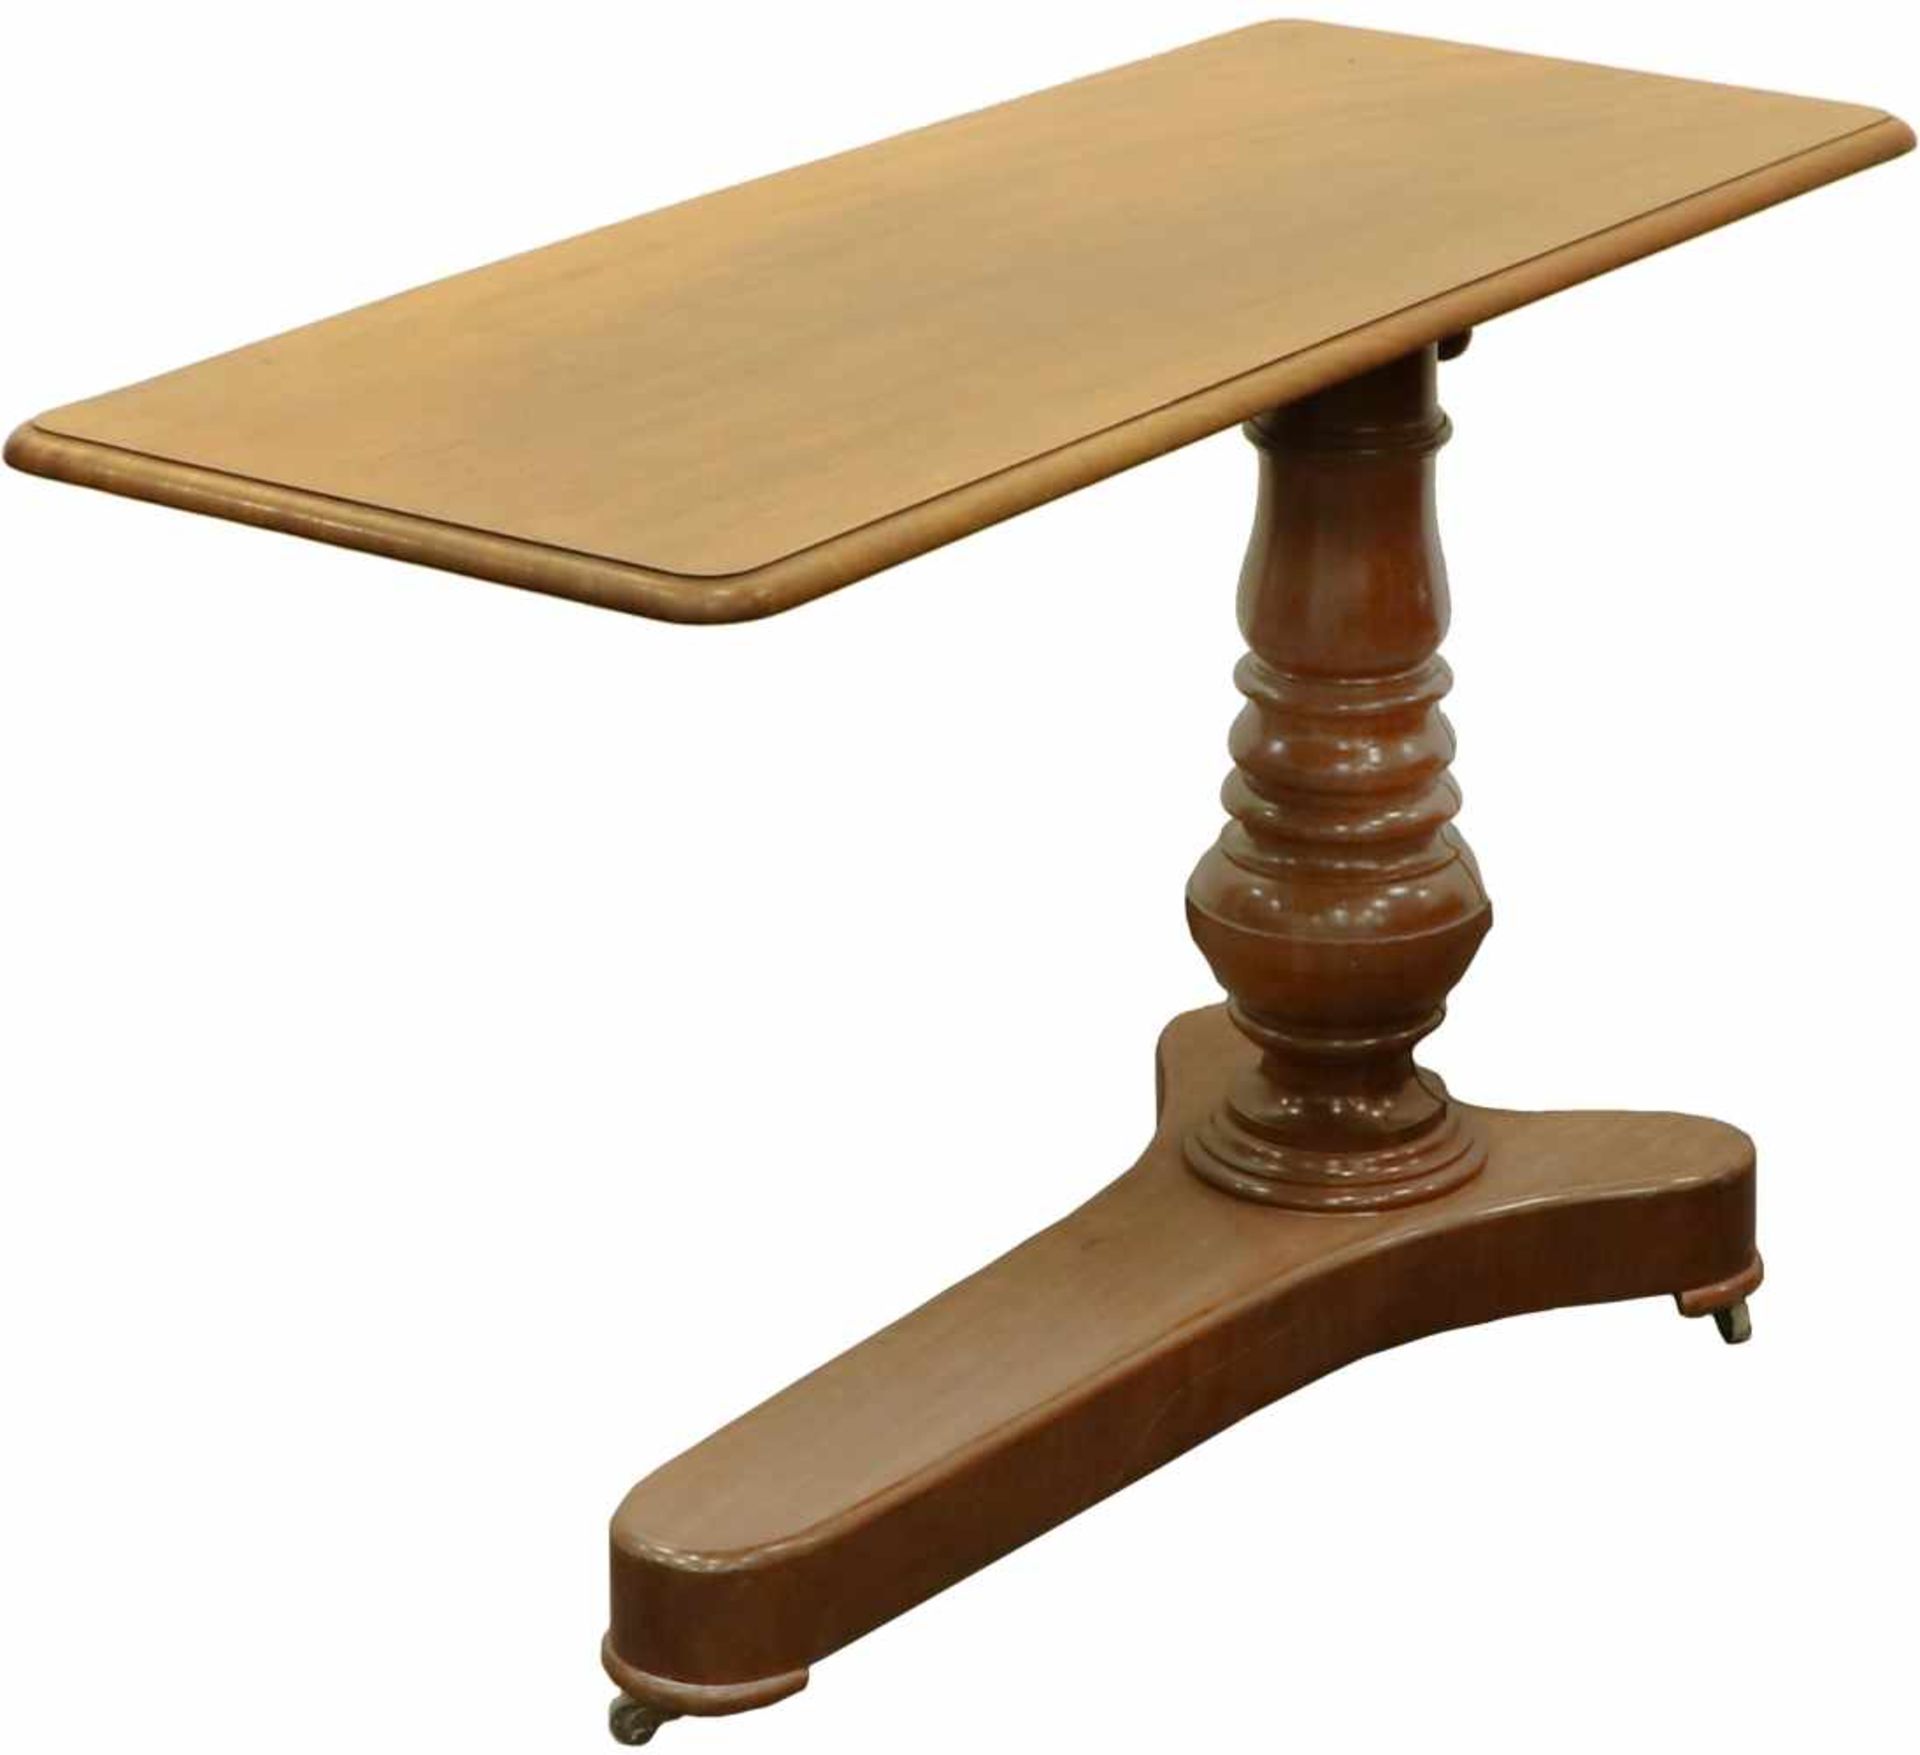 An adjustable mahogany table. England, 19th century.